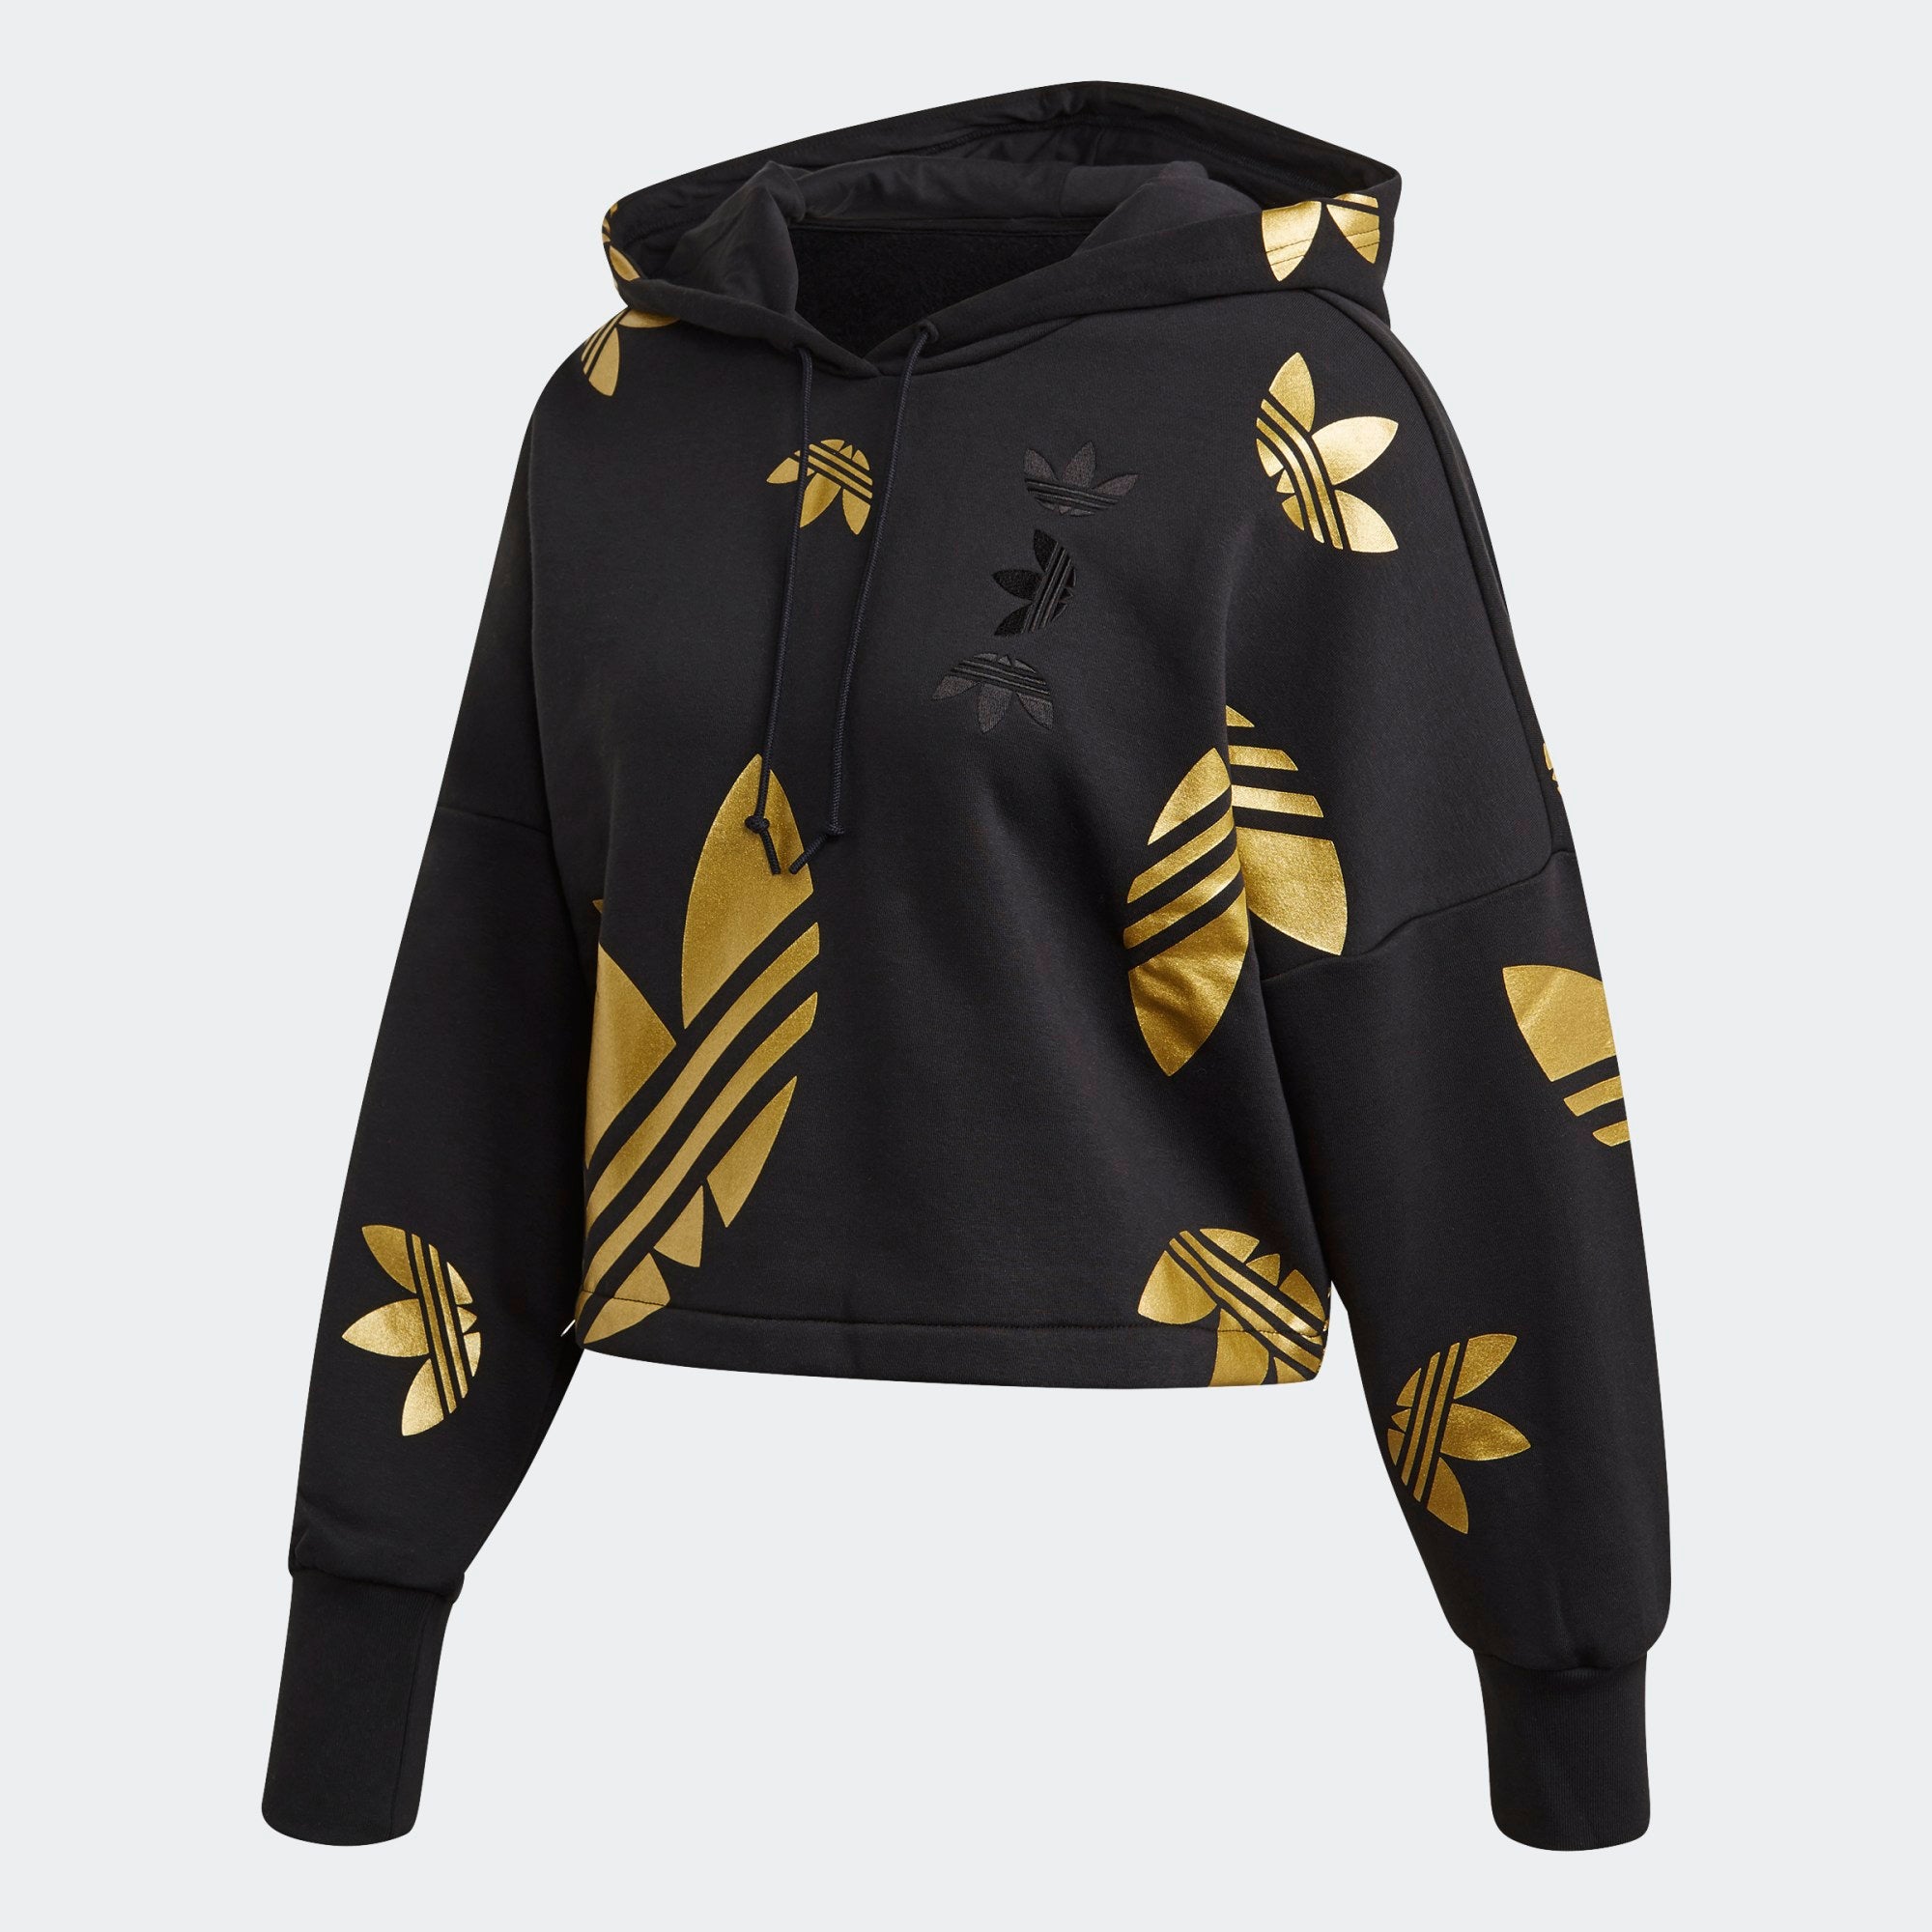 adidas black cropped hoodie women's